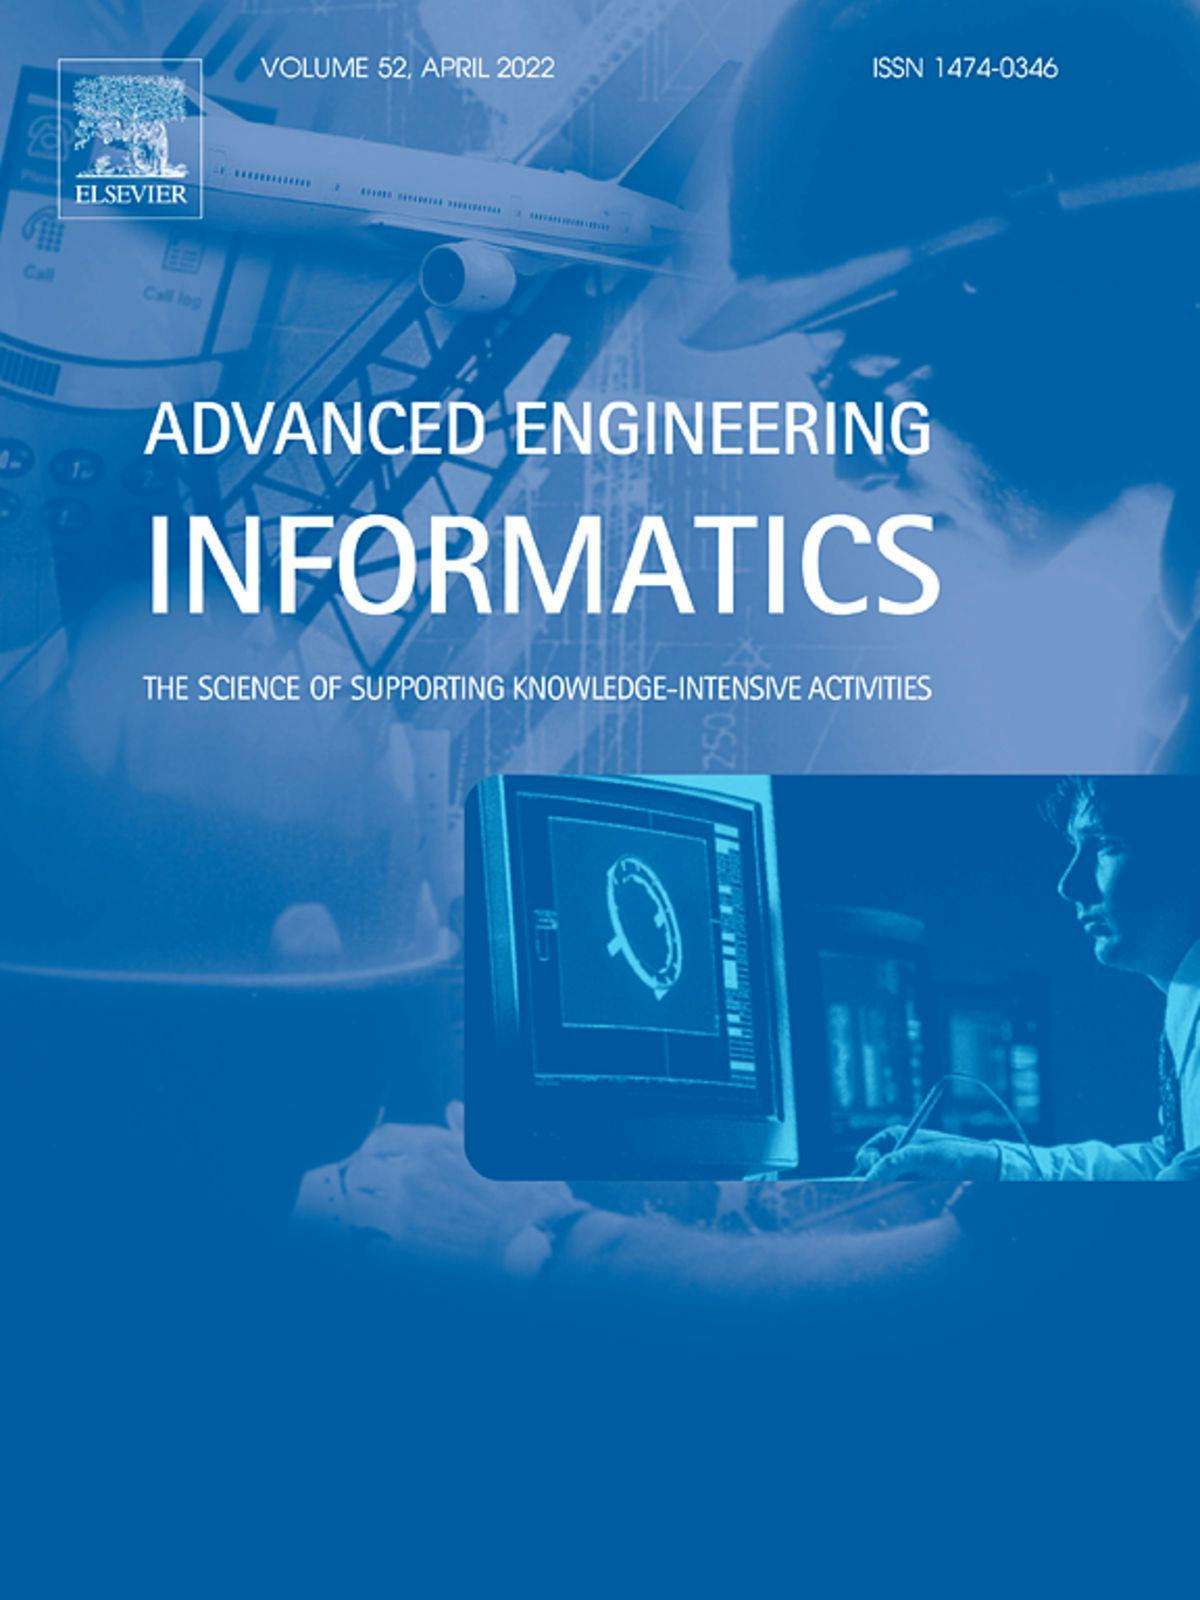 Advanced Engineering Informatics book cover, Volume 52, April 2022